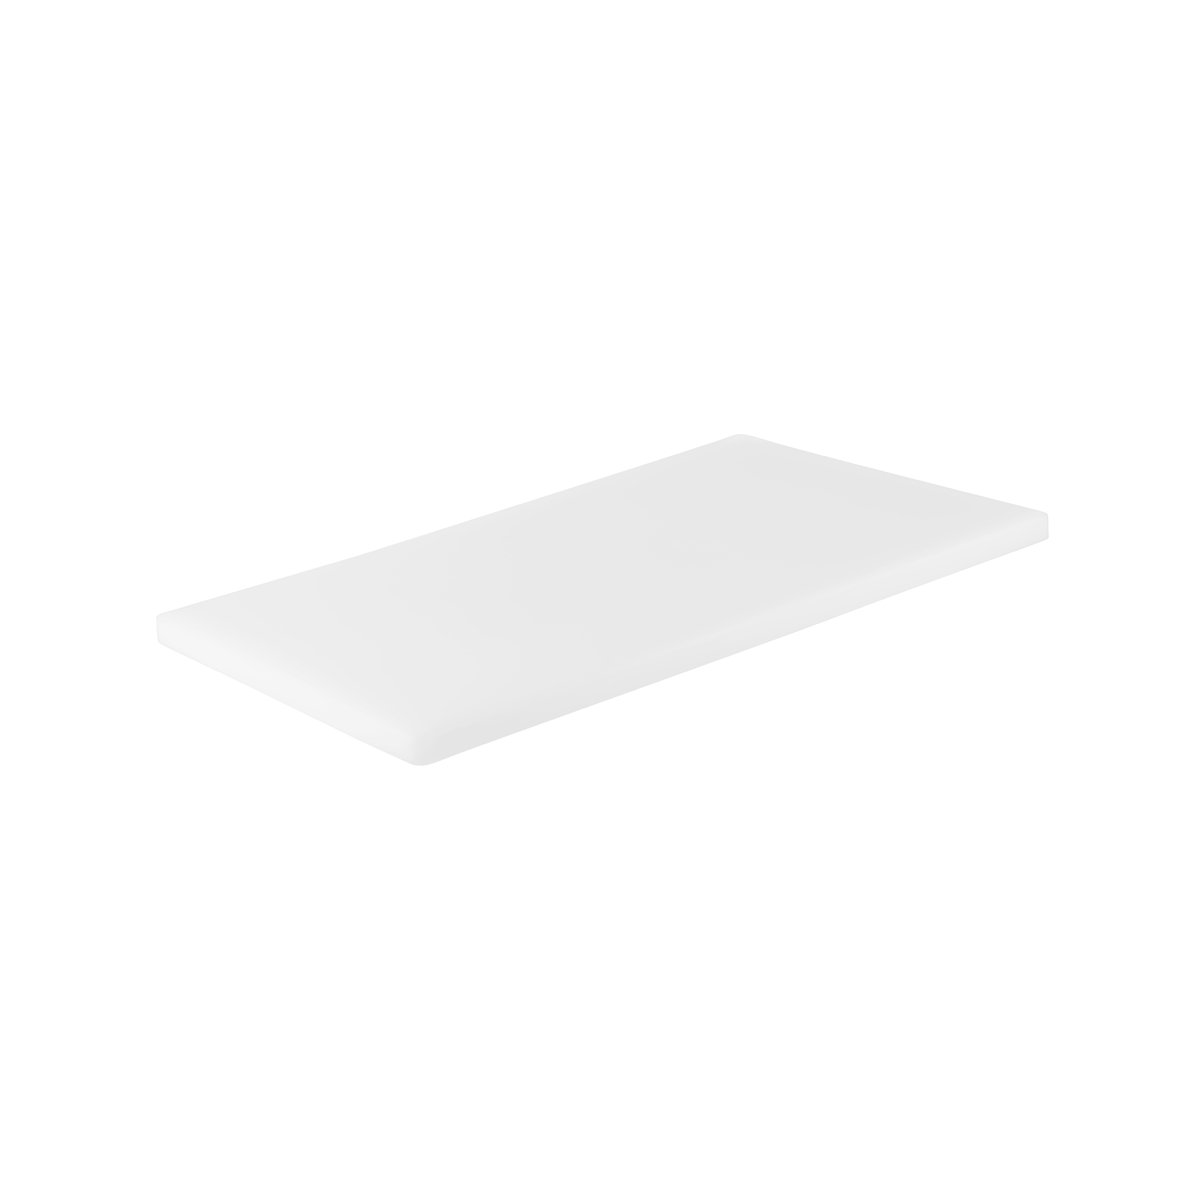 04321 Chef Inox Cutting Board Polyethylene White 380x510x12mm Tomkin Australia Hospitality Supplies